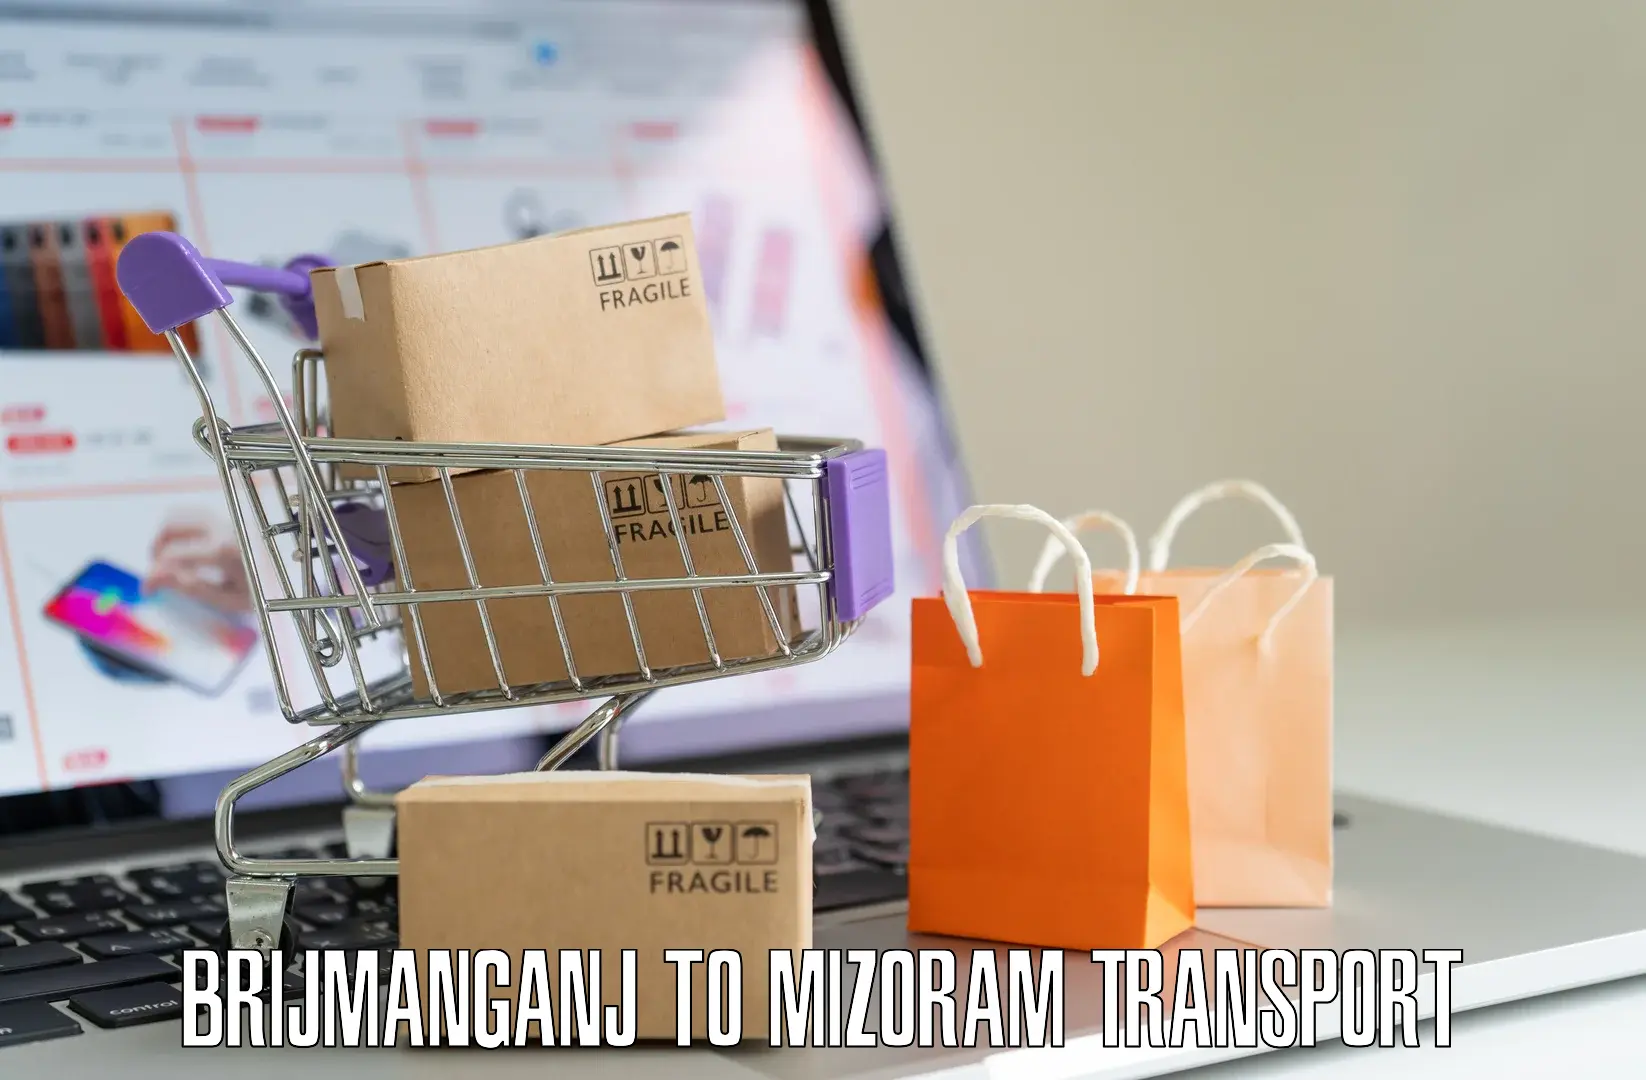 Transport bike from one state to another Brijmanganj to Mizoram